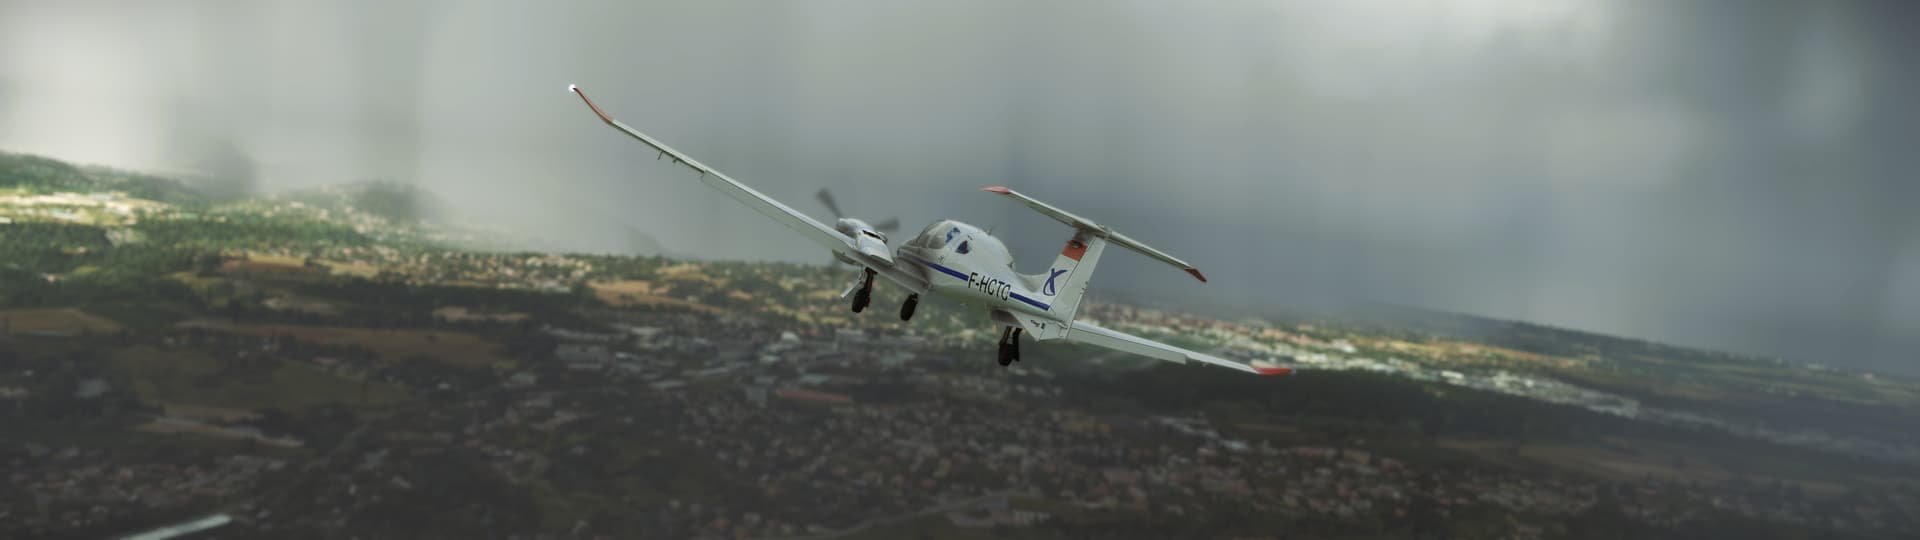 http://image.noelshack.com/fichiers/2022/52/5/1672429667-microsoft-flight-simulator-screenshot-2022-12-30-19-07-51-73.jpg